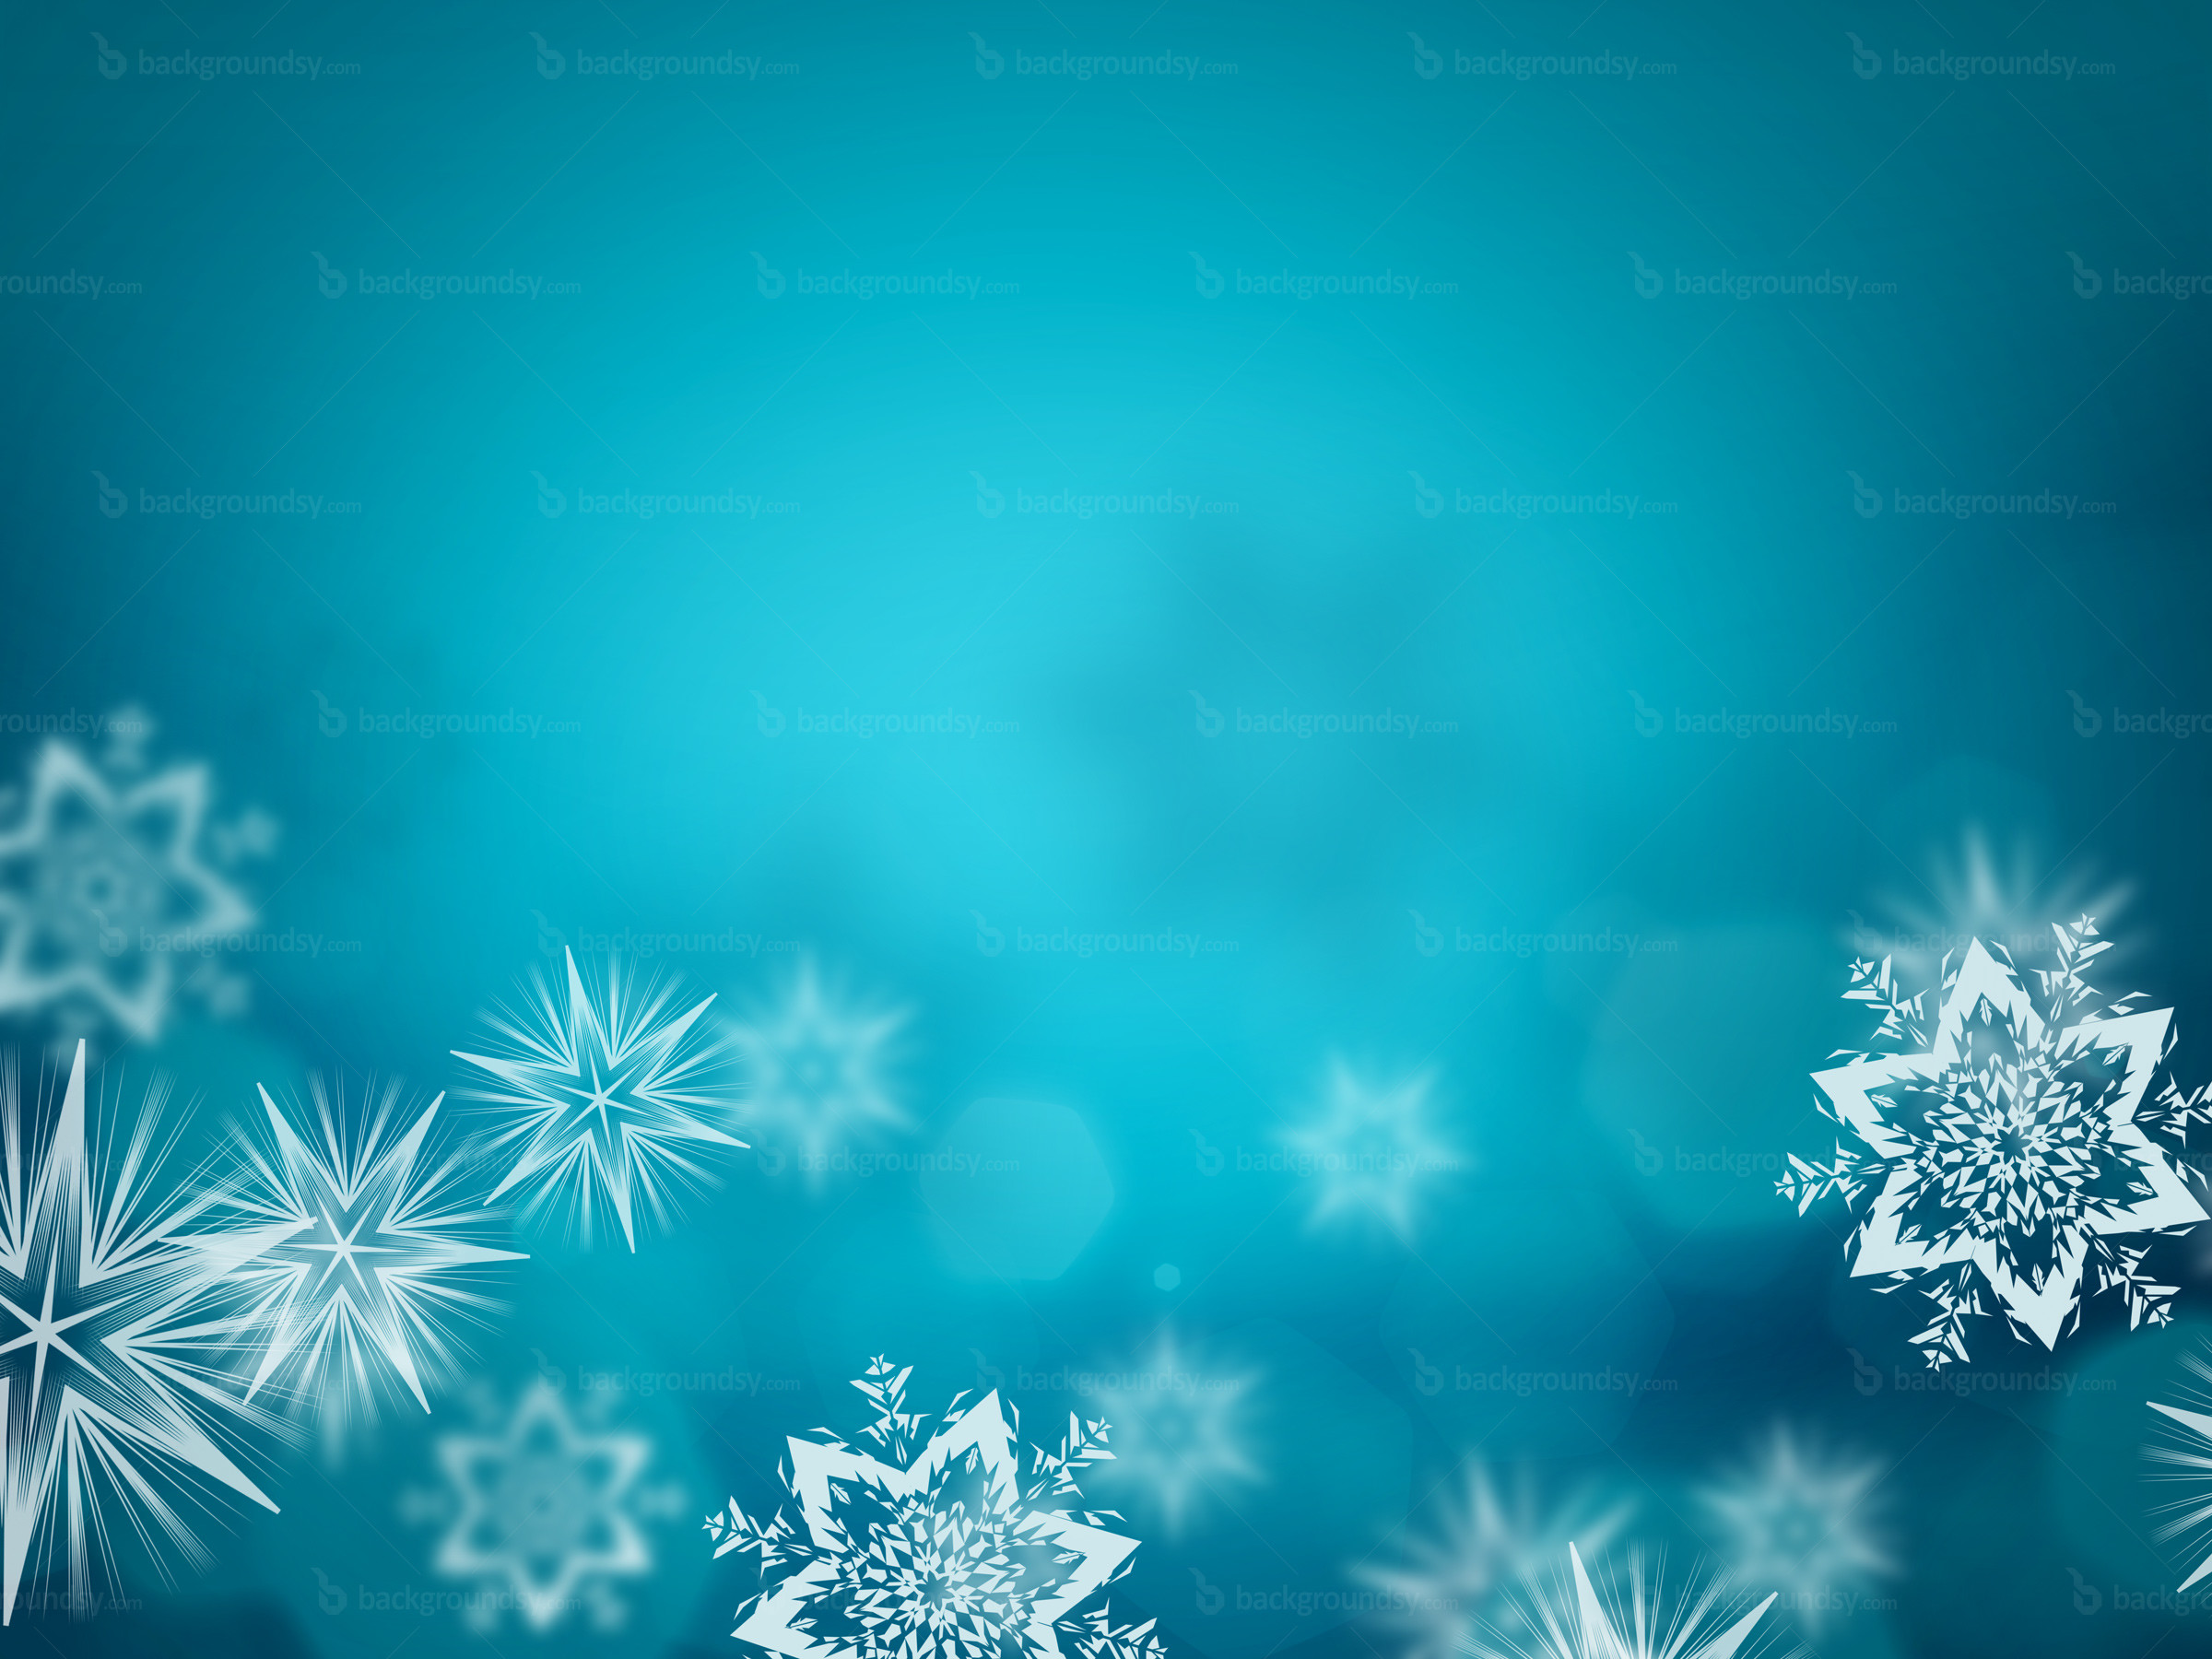 File Name Winter Christmas Desktop Backgrounds Home Design Ideas